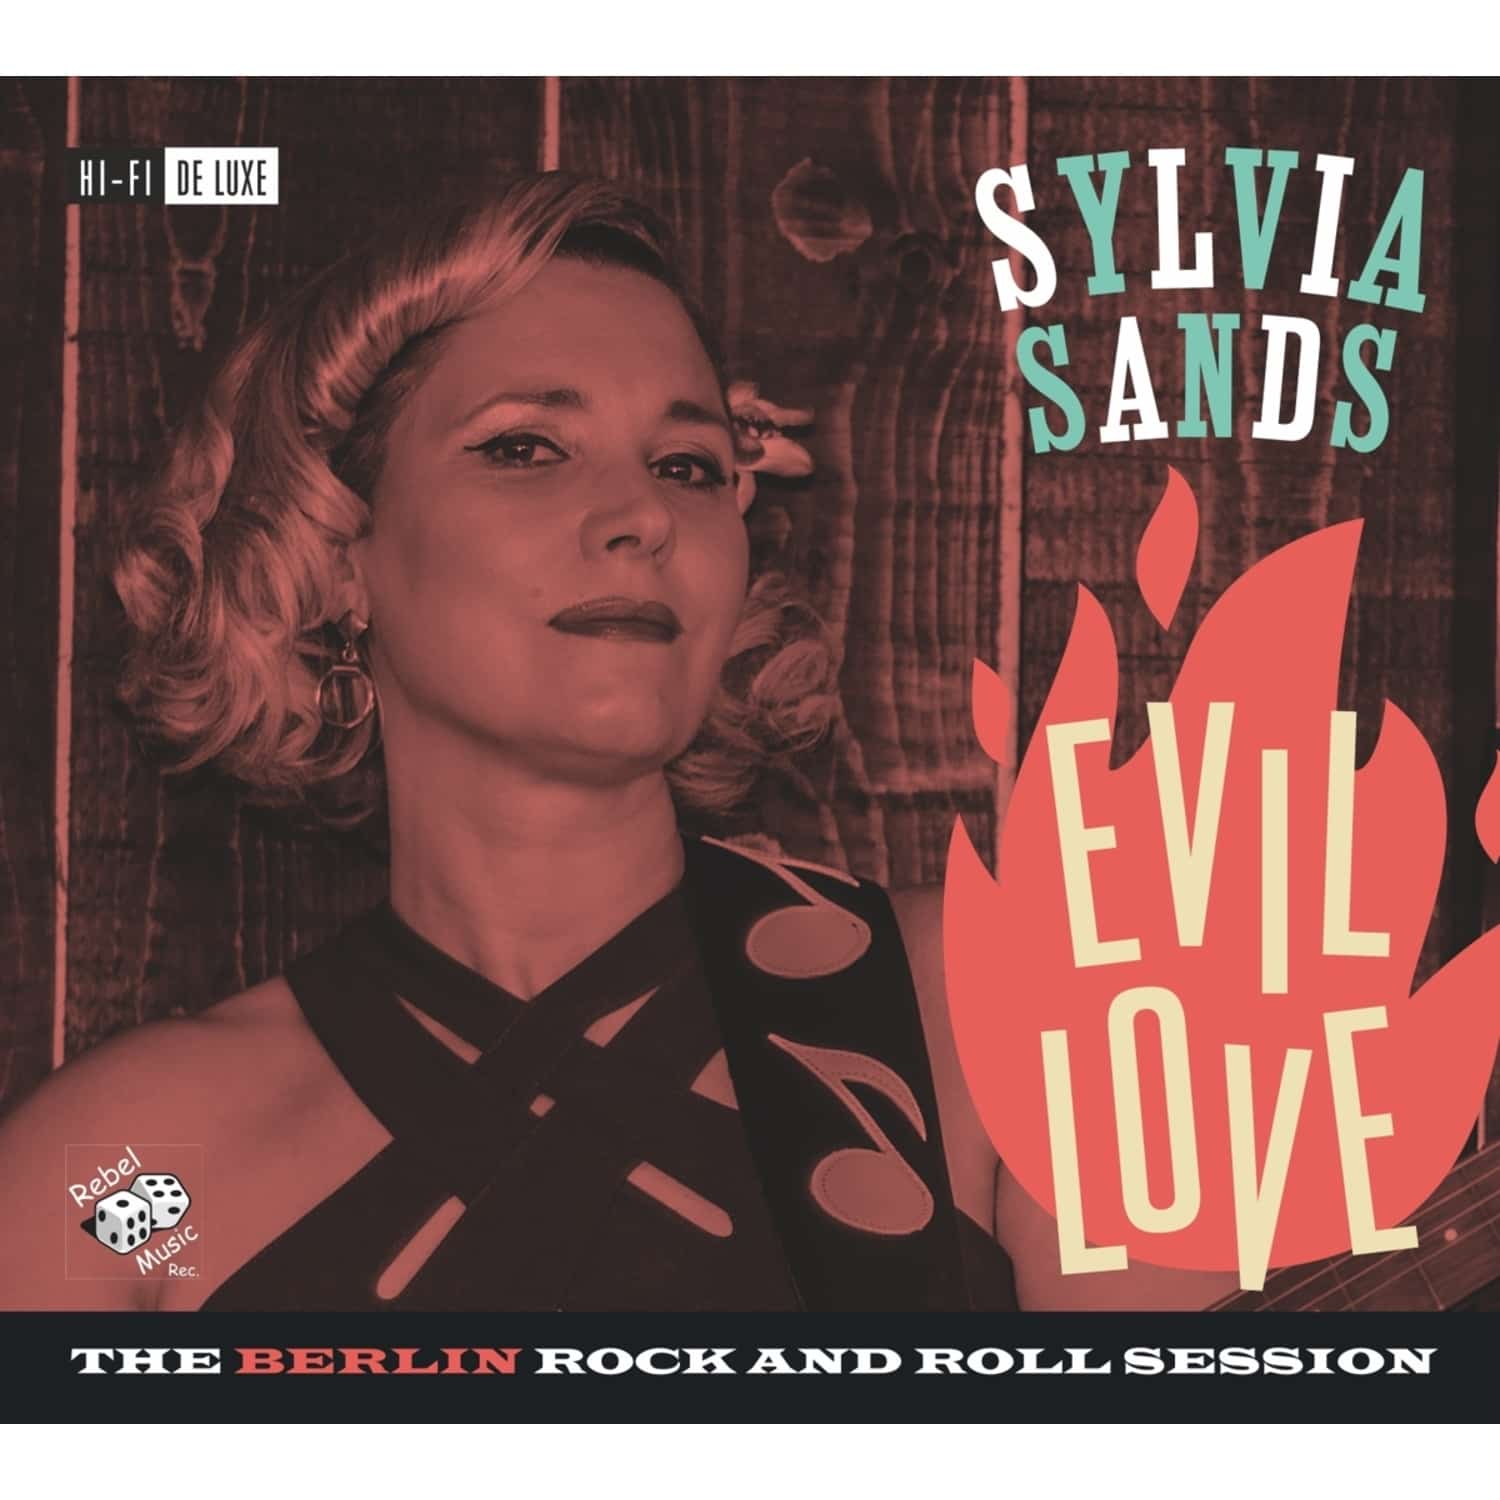  Sylvia Sands - EVIL LOVE 